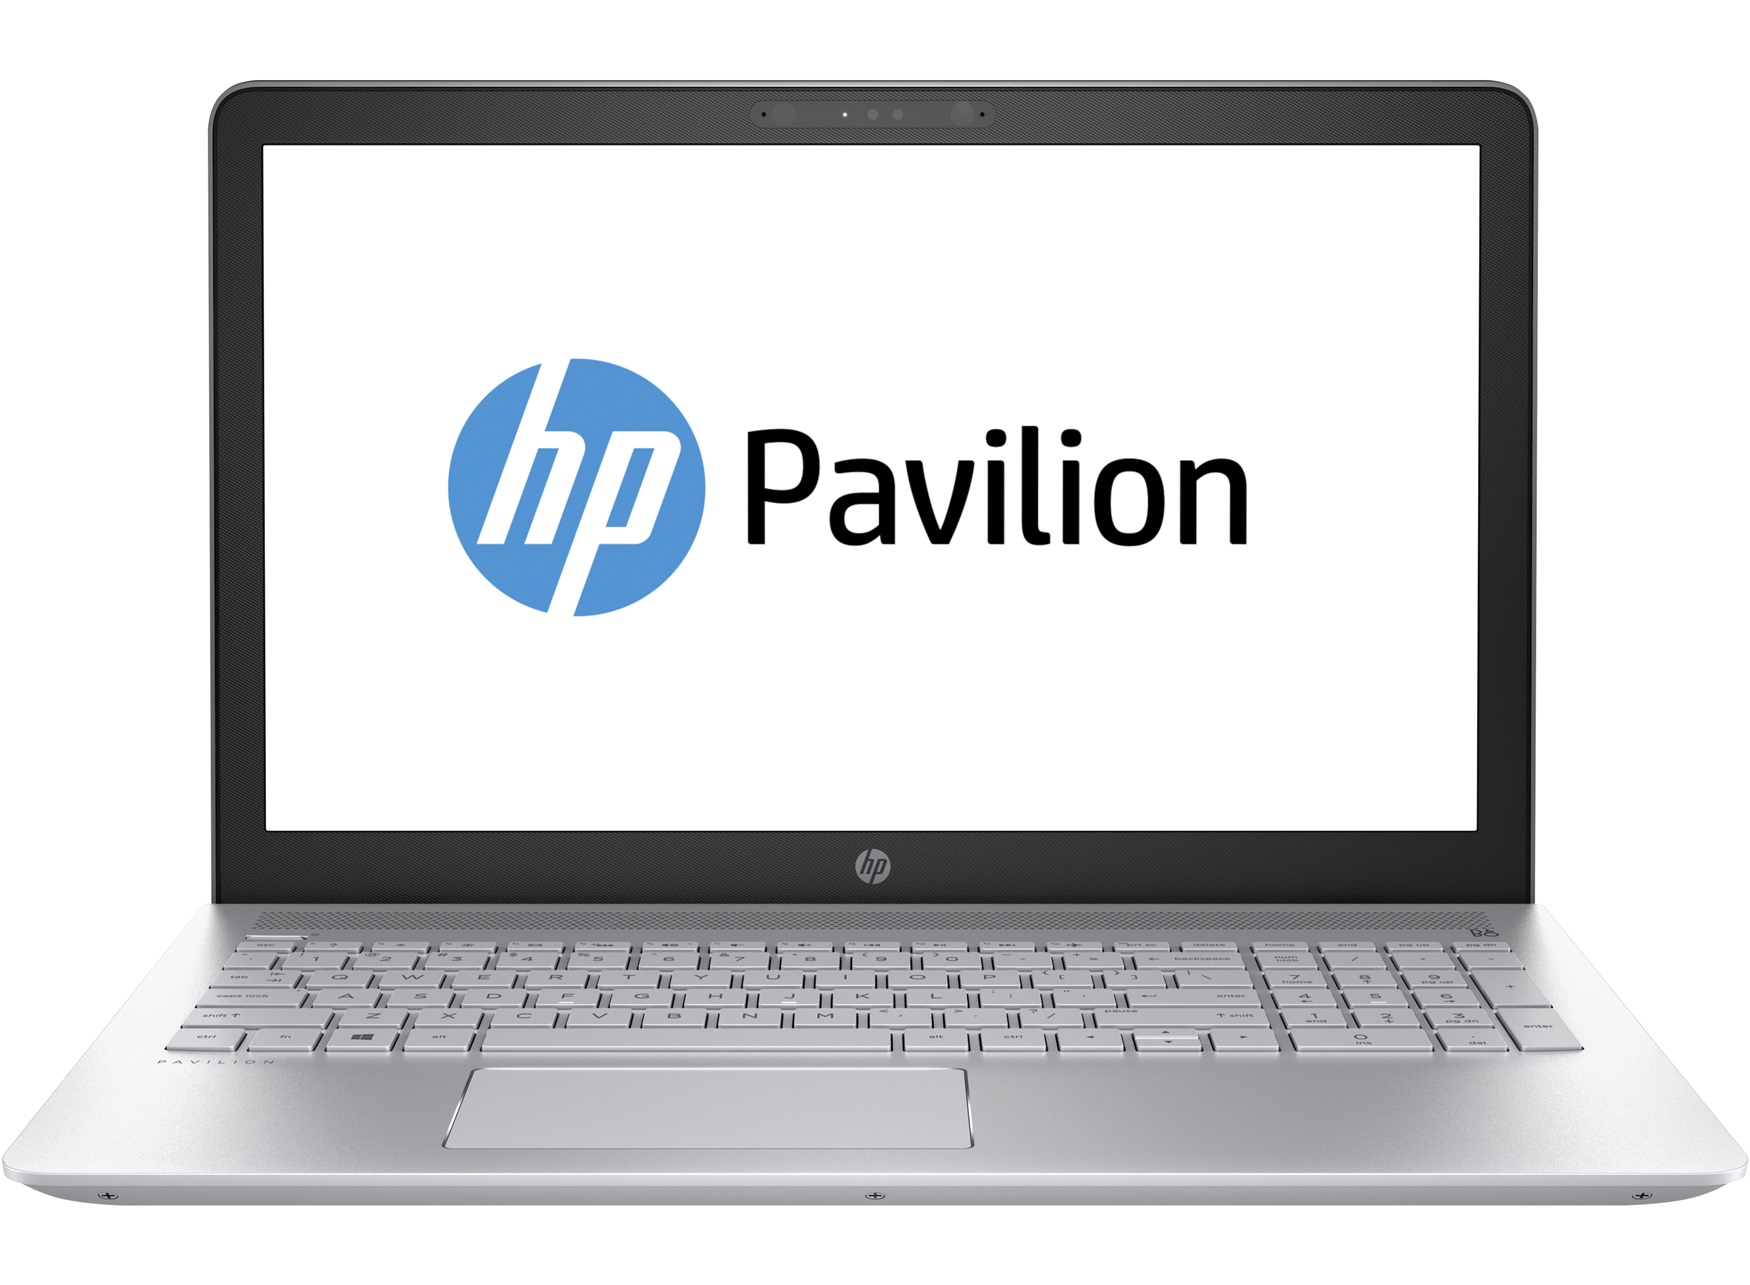 HP Pavilion 15 Intel Core i7-8550U